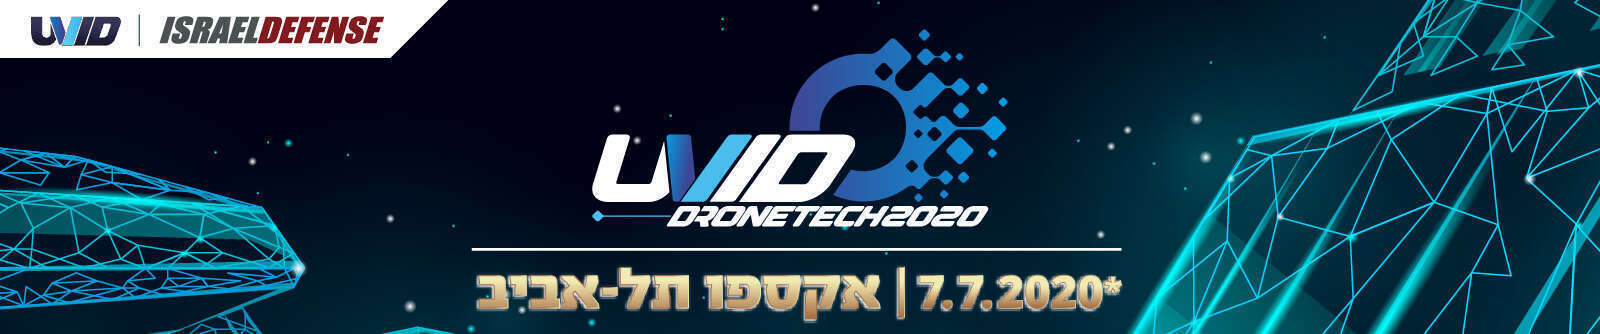 UVID DroneTech 2020